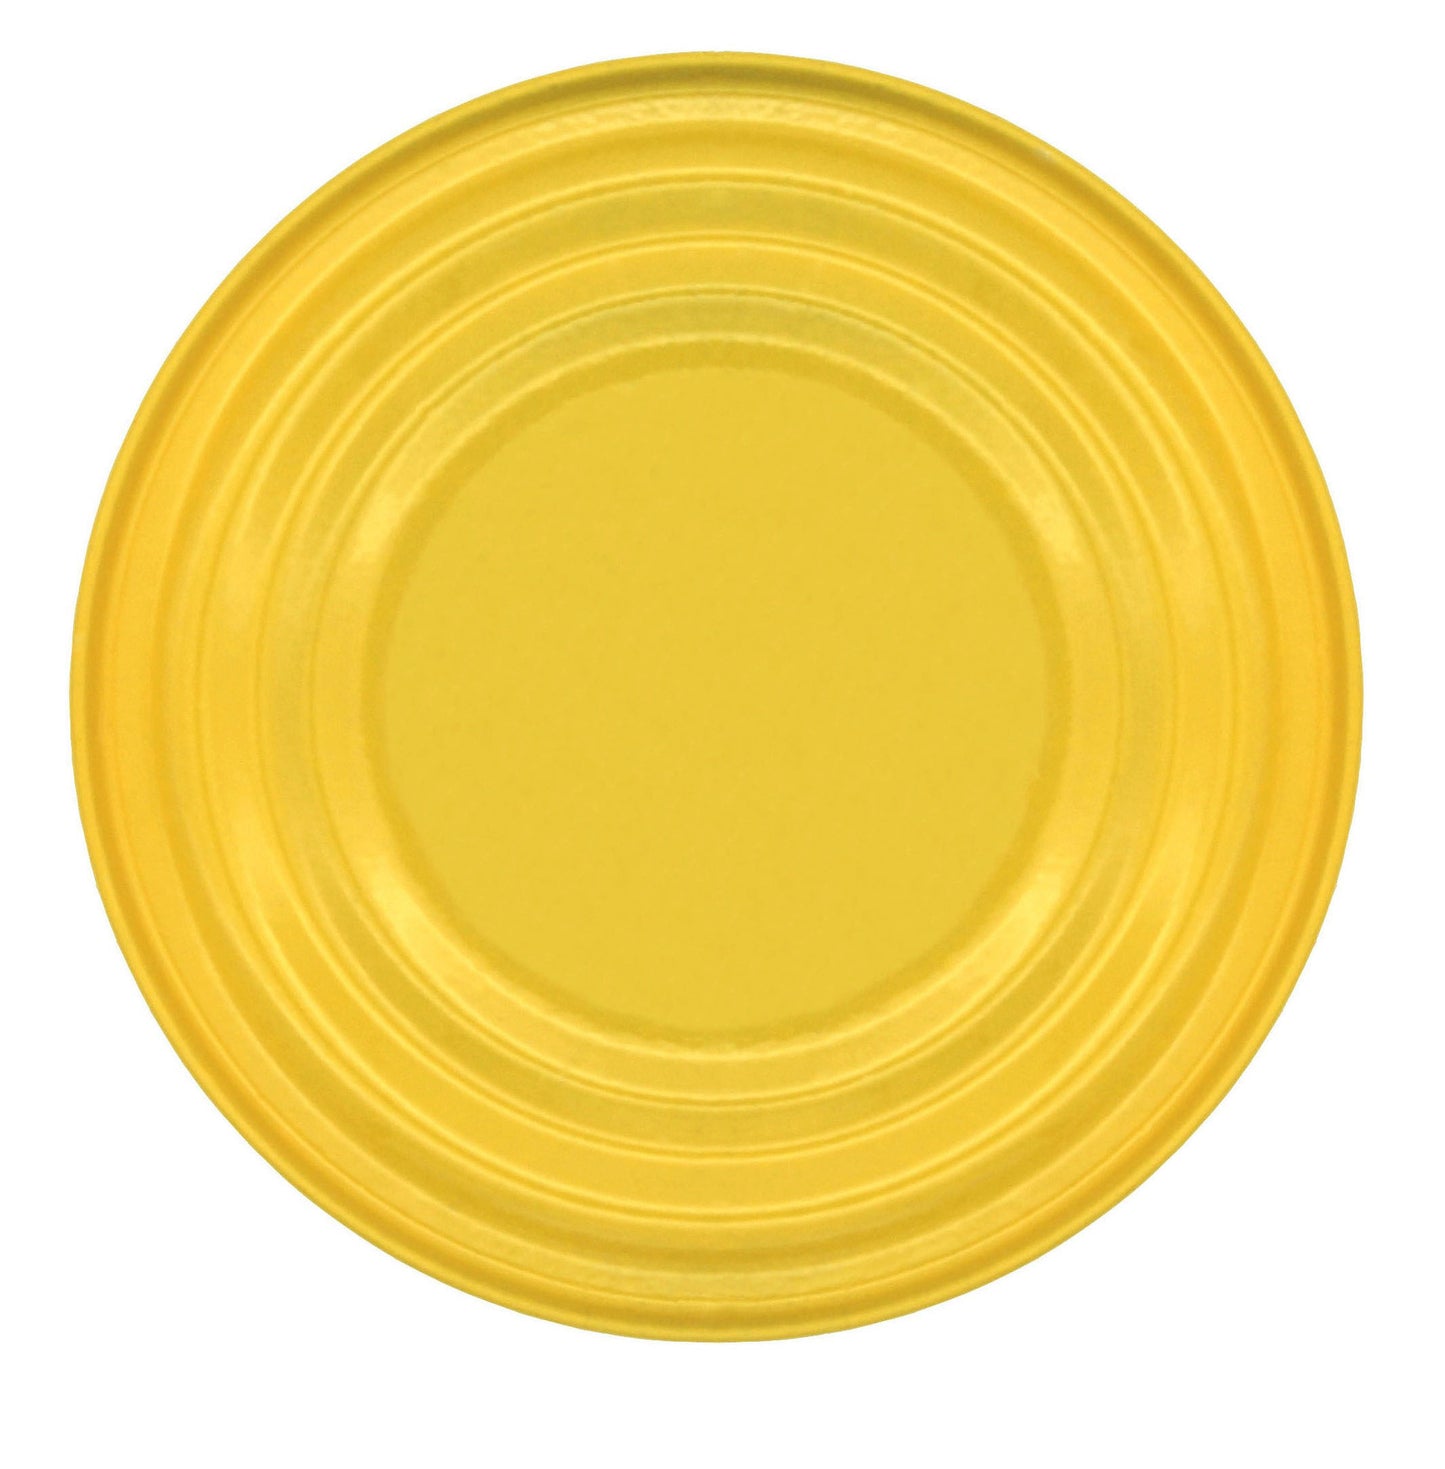 RAL 1018 - Zinc Yellow